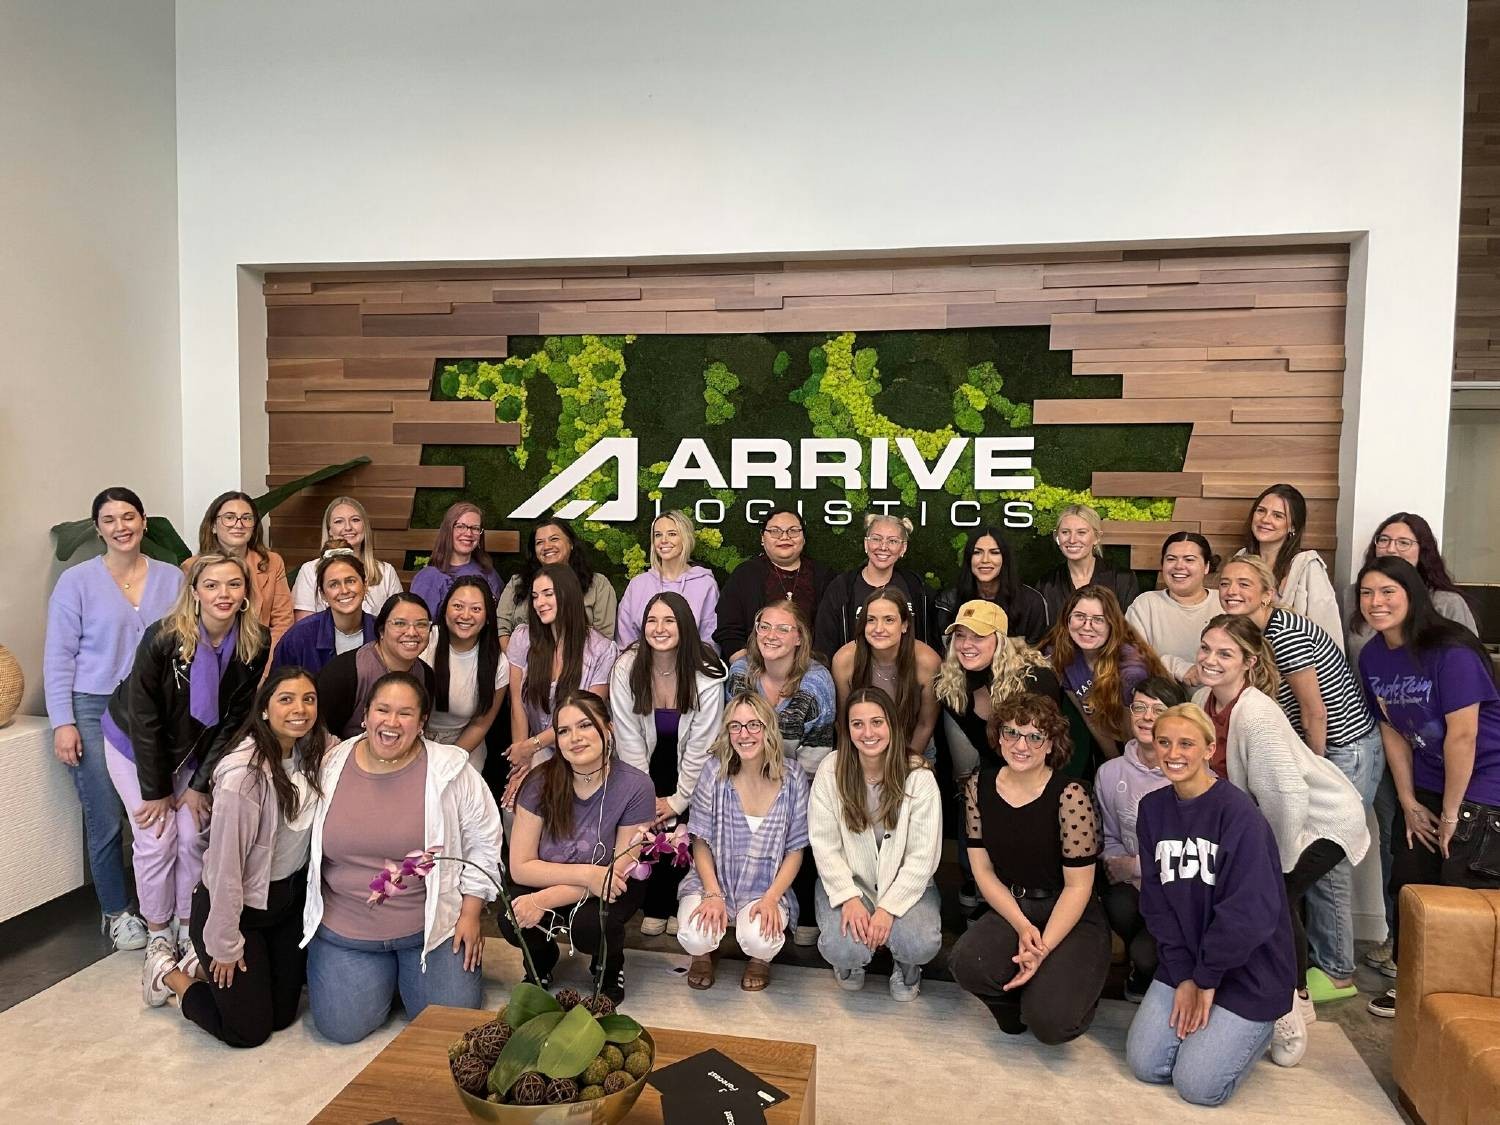 The Arrive Logistics team celebrates International Women's Day